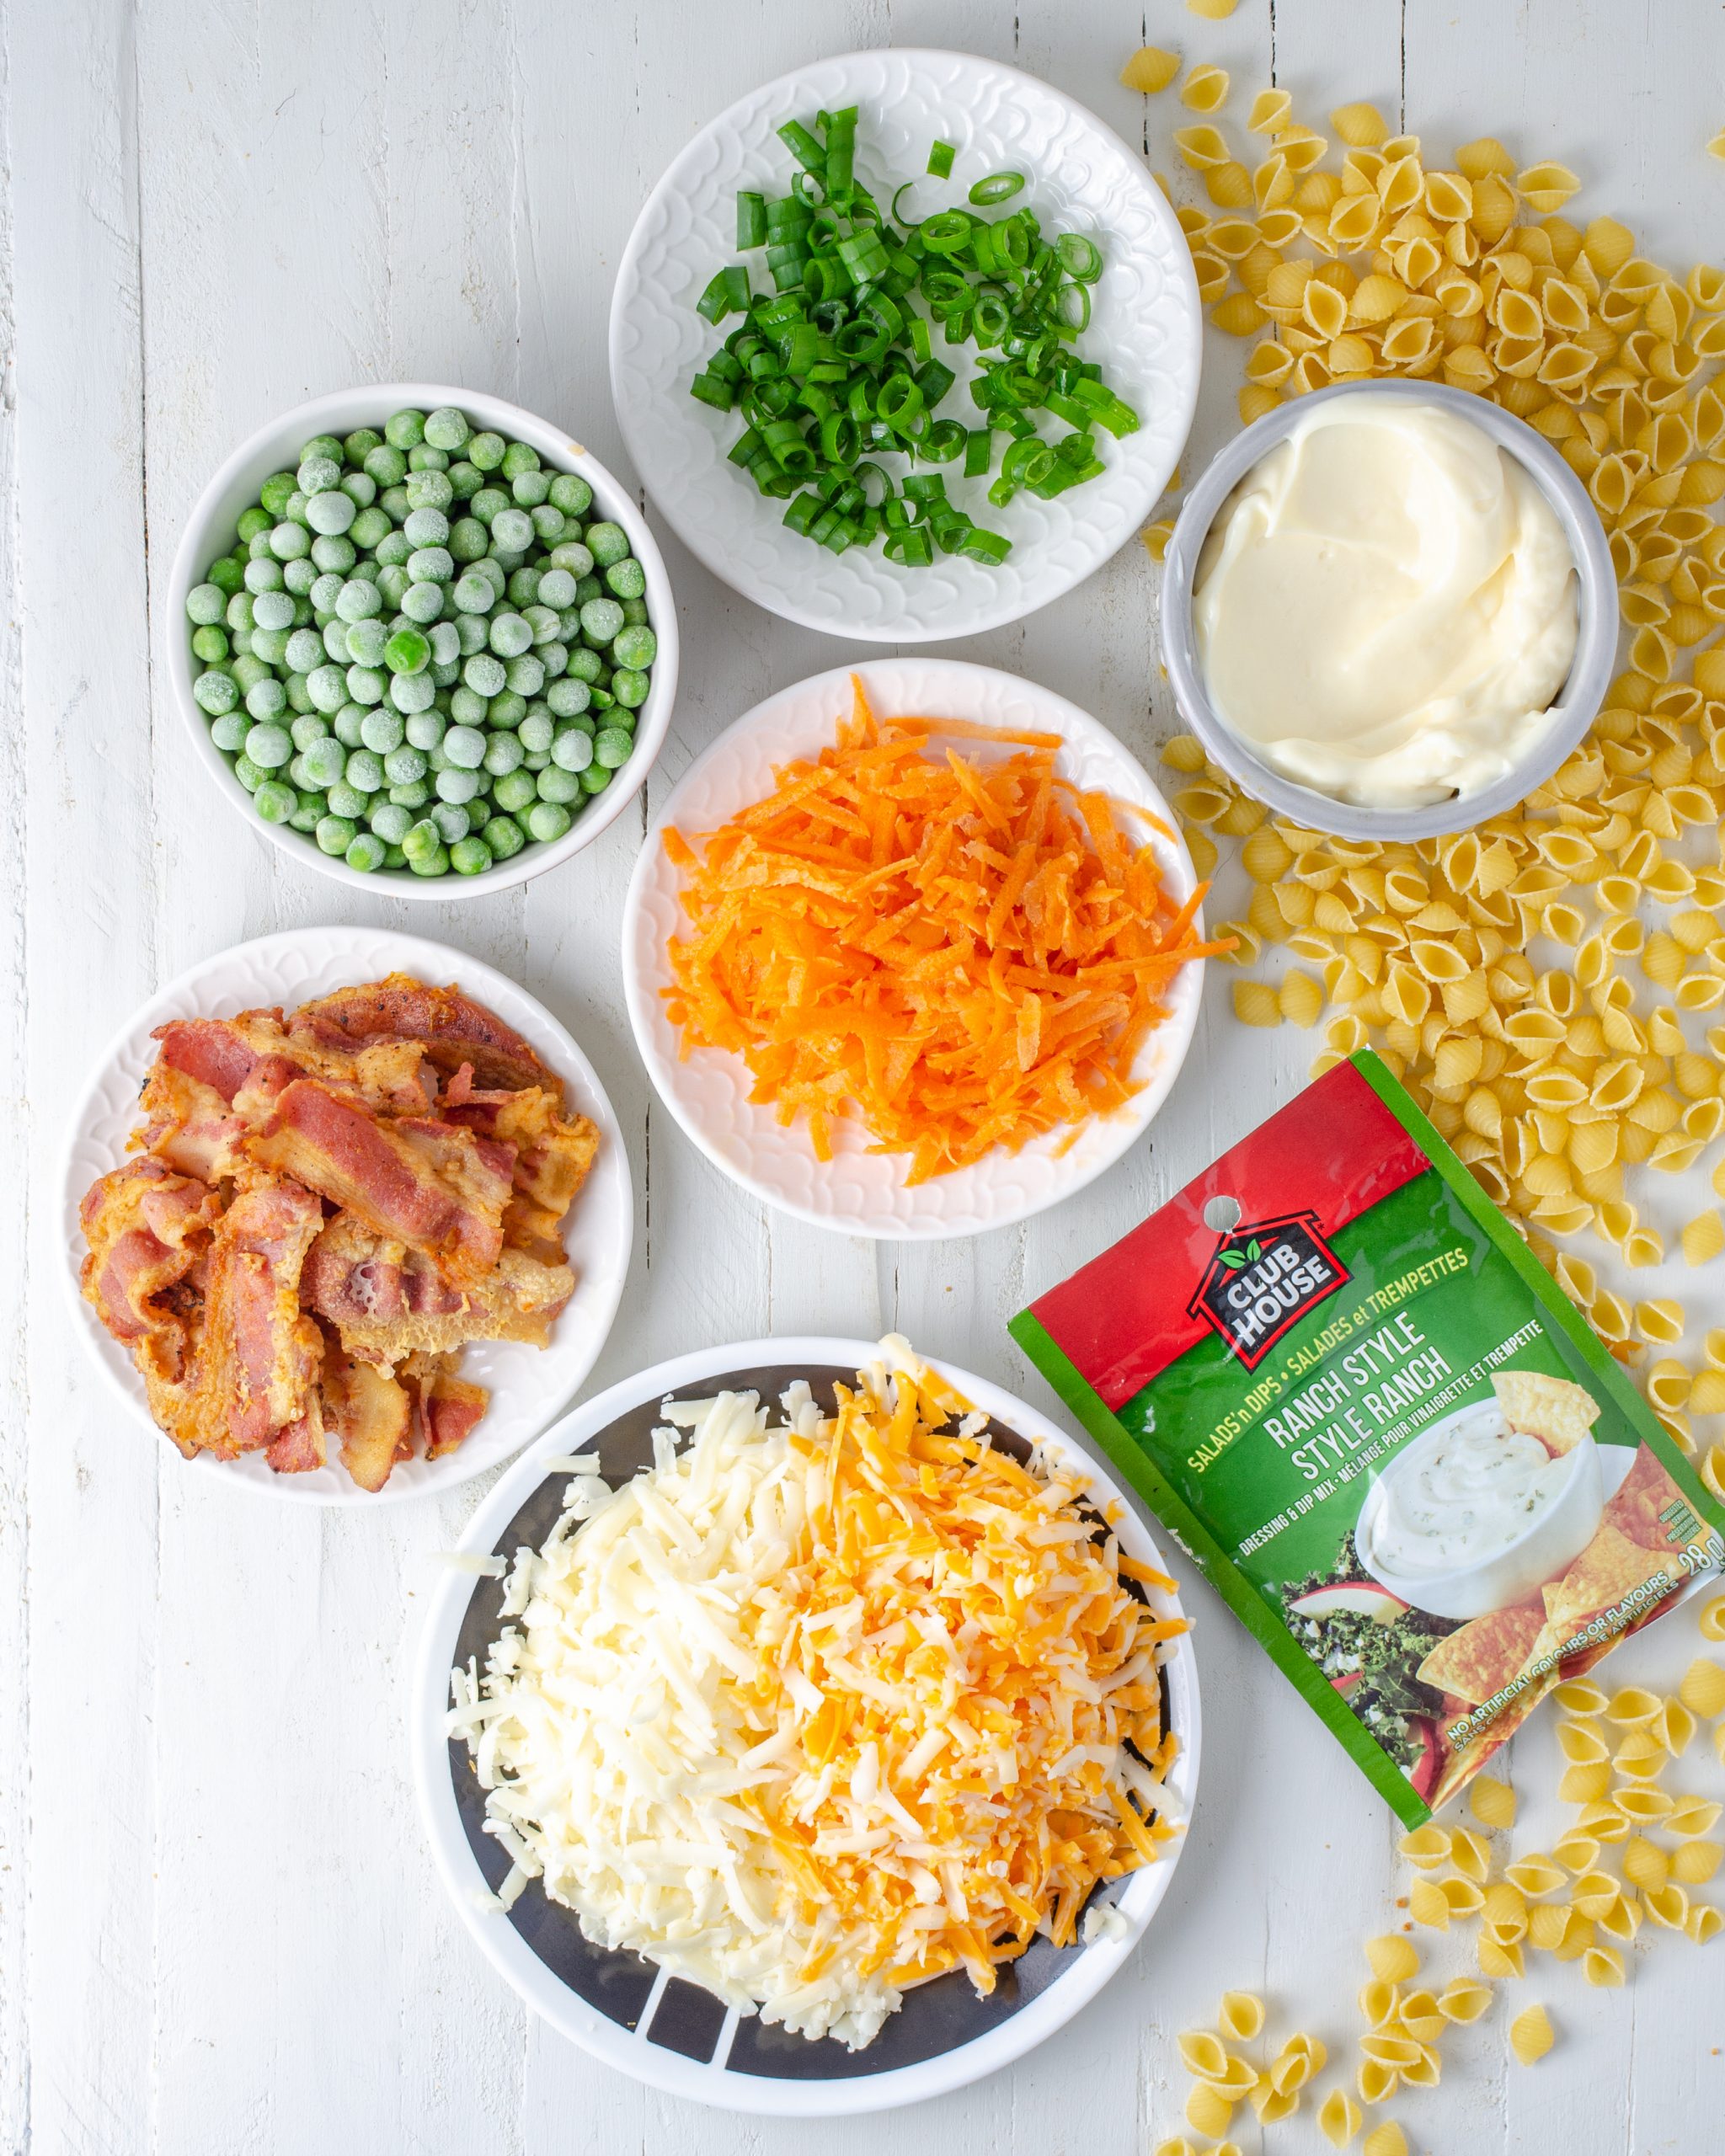 peas and pasta ingredients